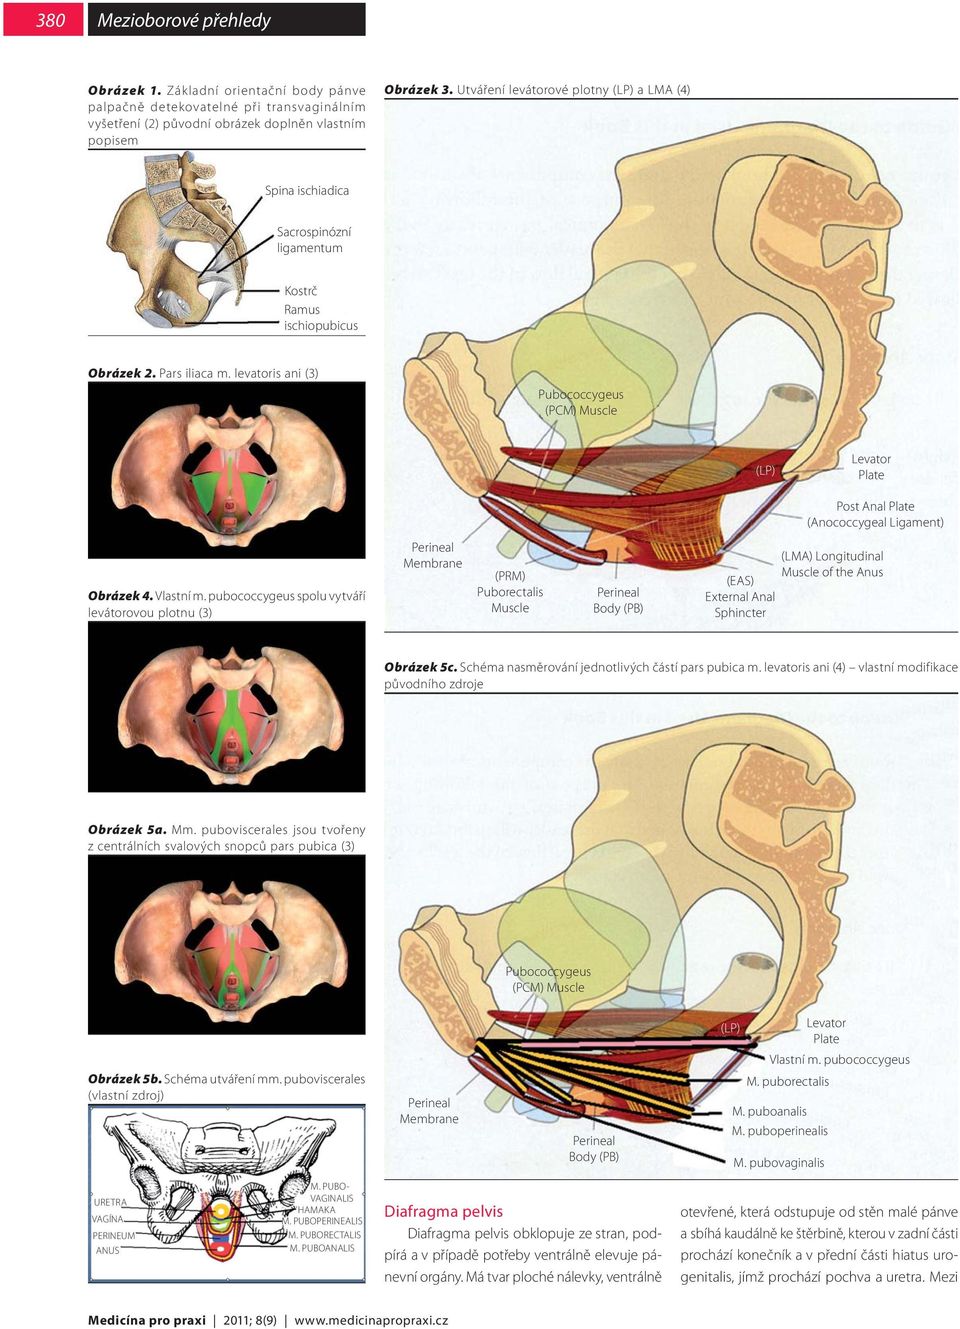 levatoris ani (3) Pubococcygeus (PCM) Muscle (LP) Levator Plate Post Anal Plate (Anococcygeal Ligament) Obrázek 4. Vlastní m.